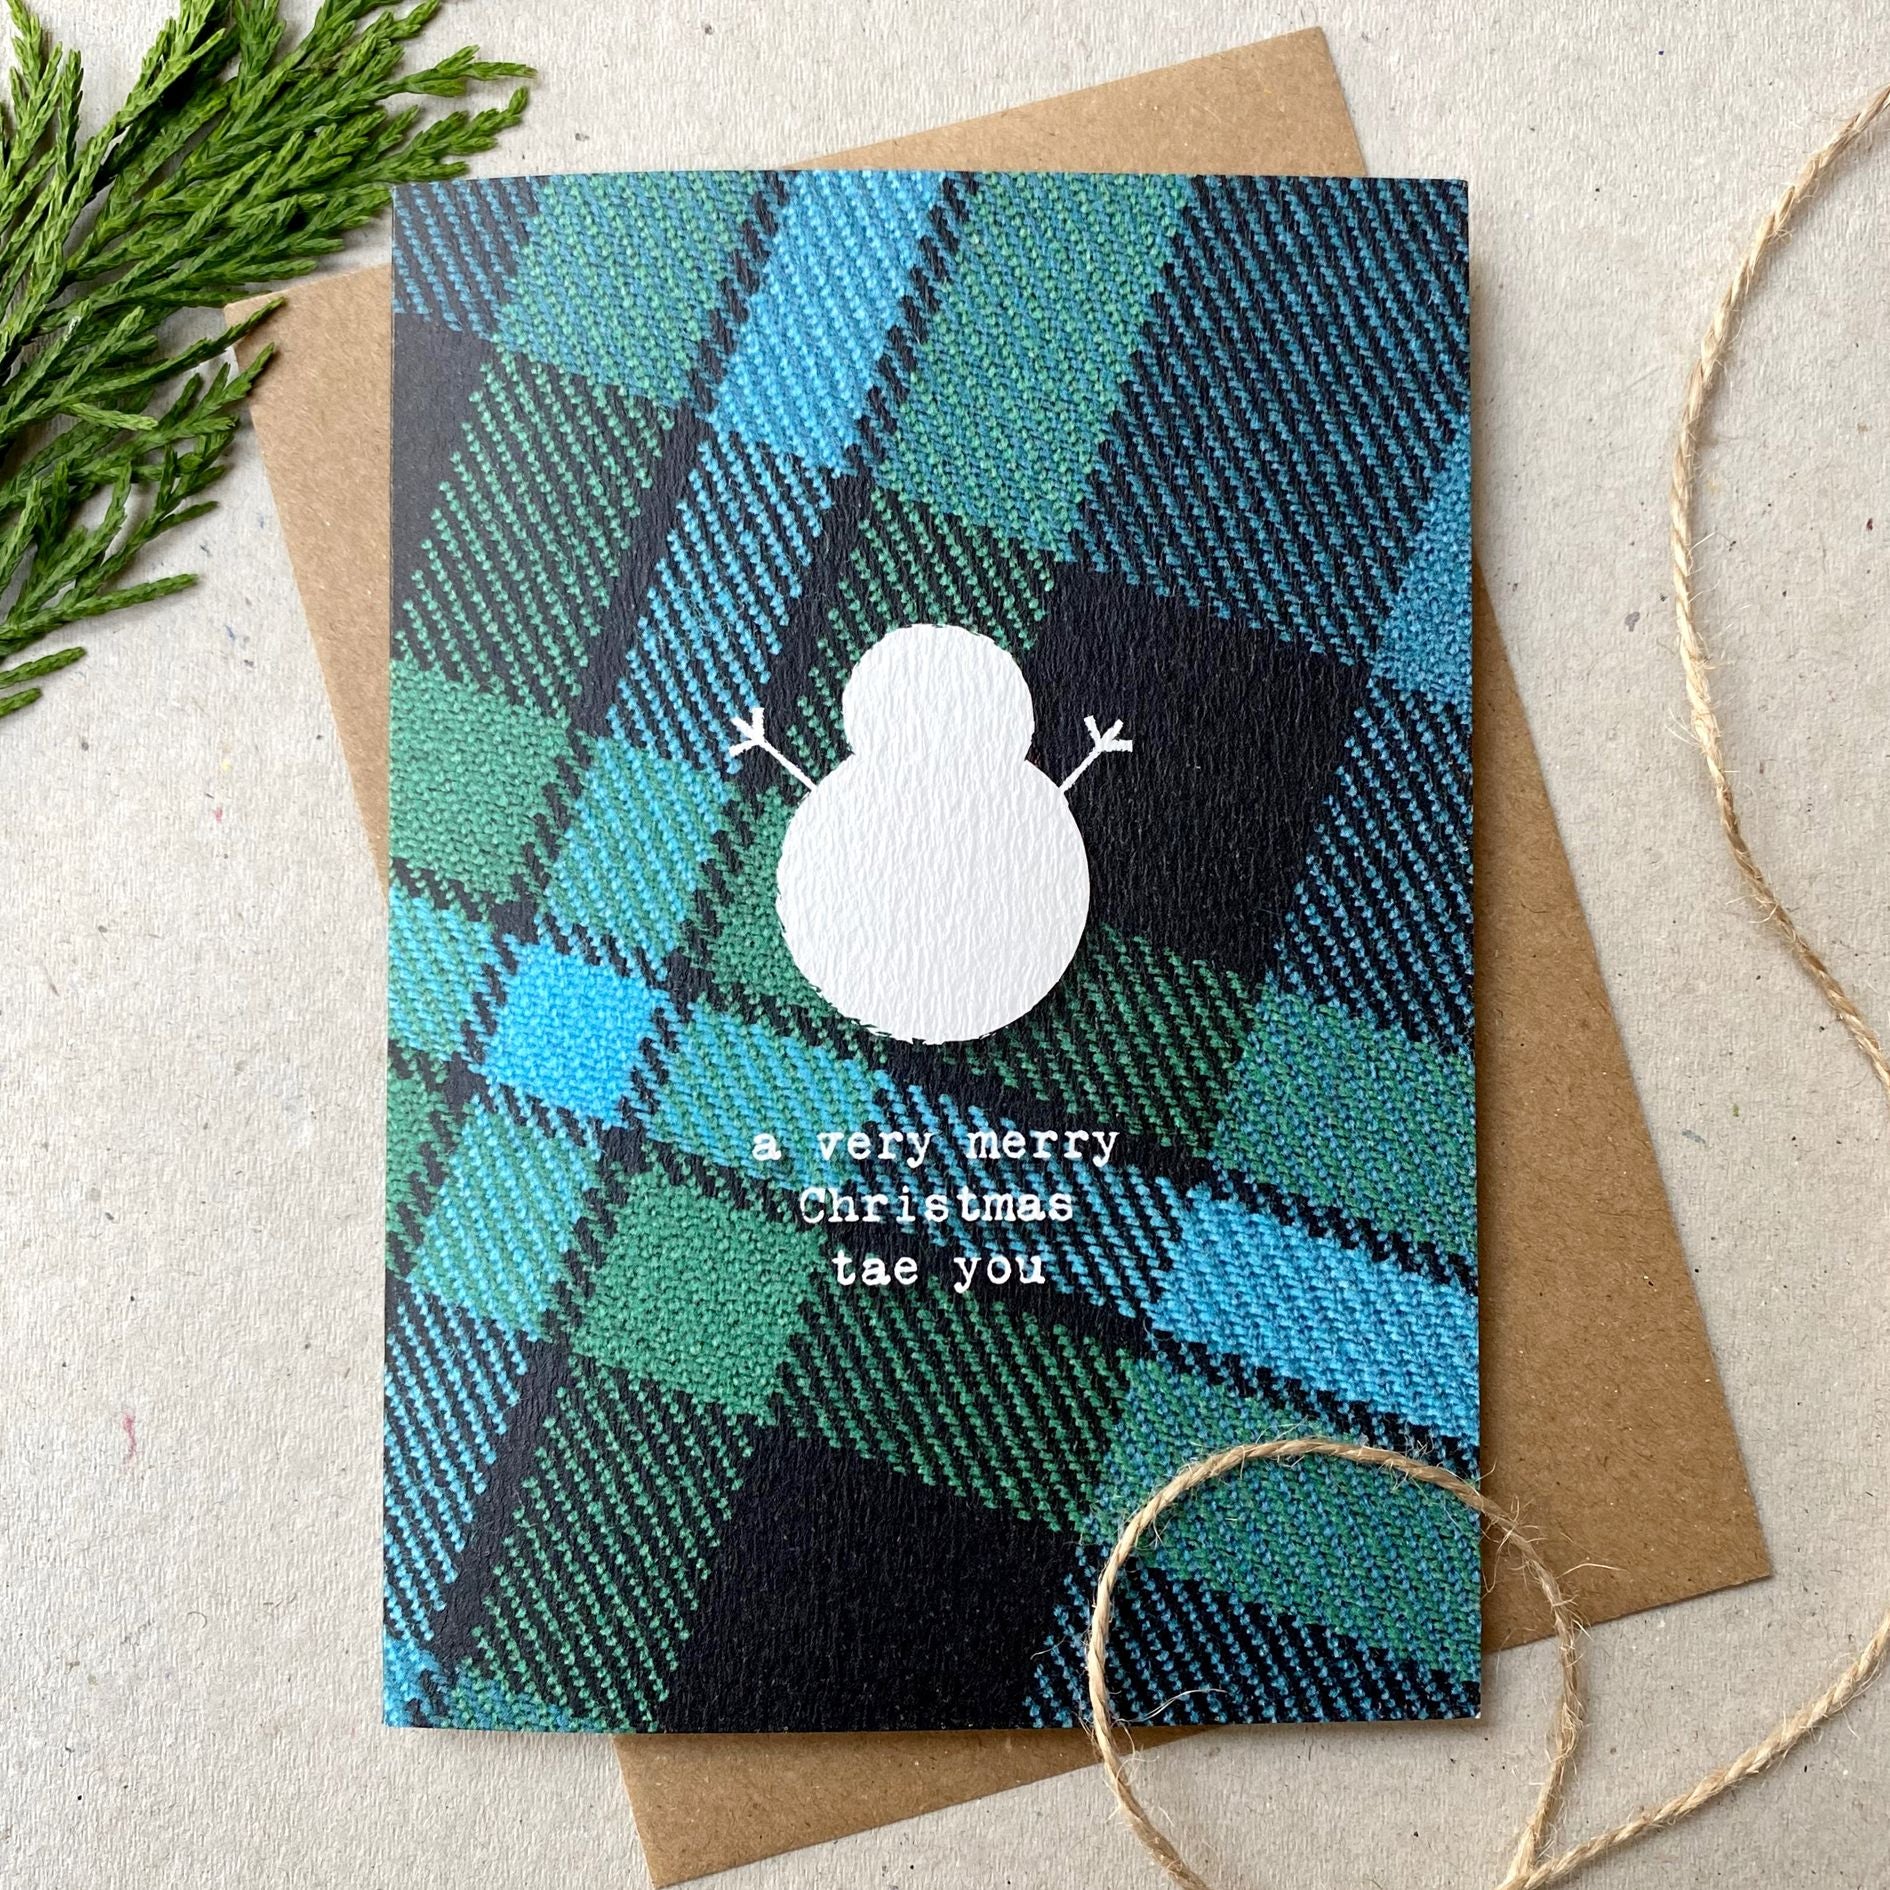 Pack of 8 Scottish Christmas Cards by Hiya Pal